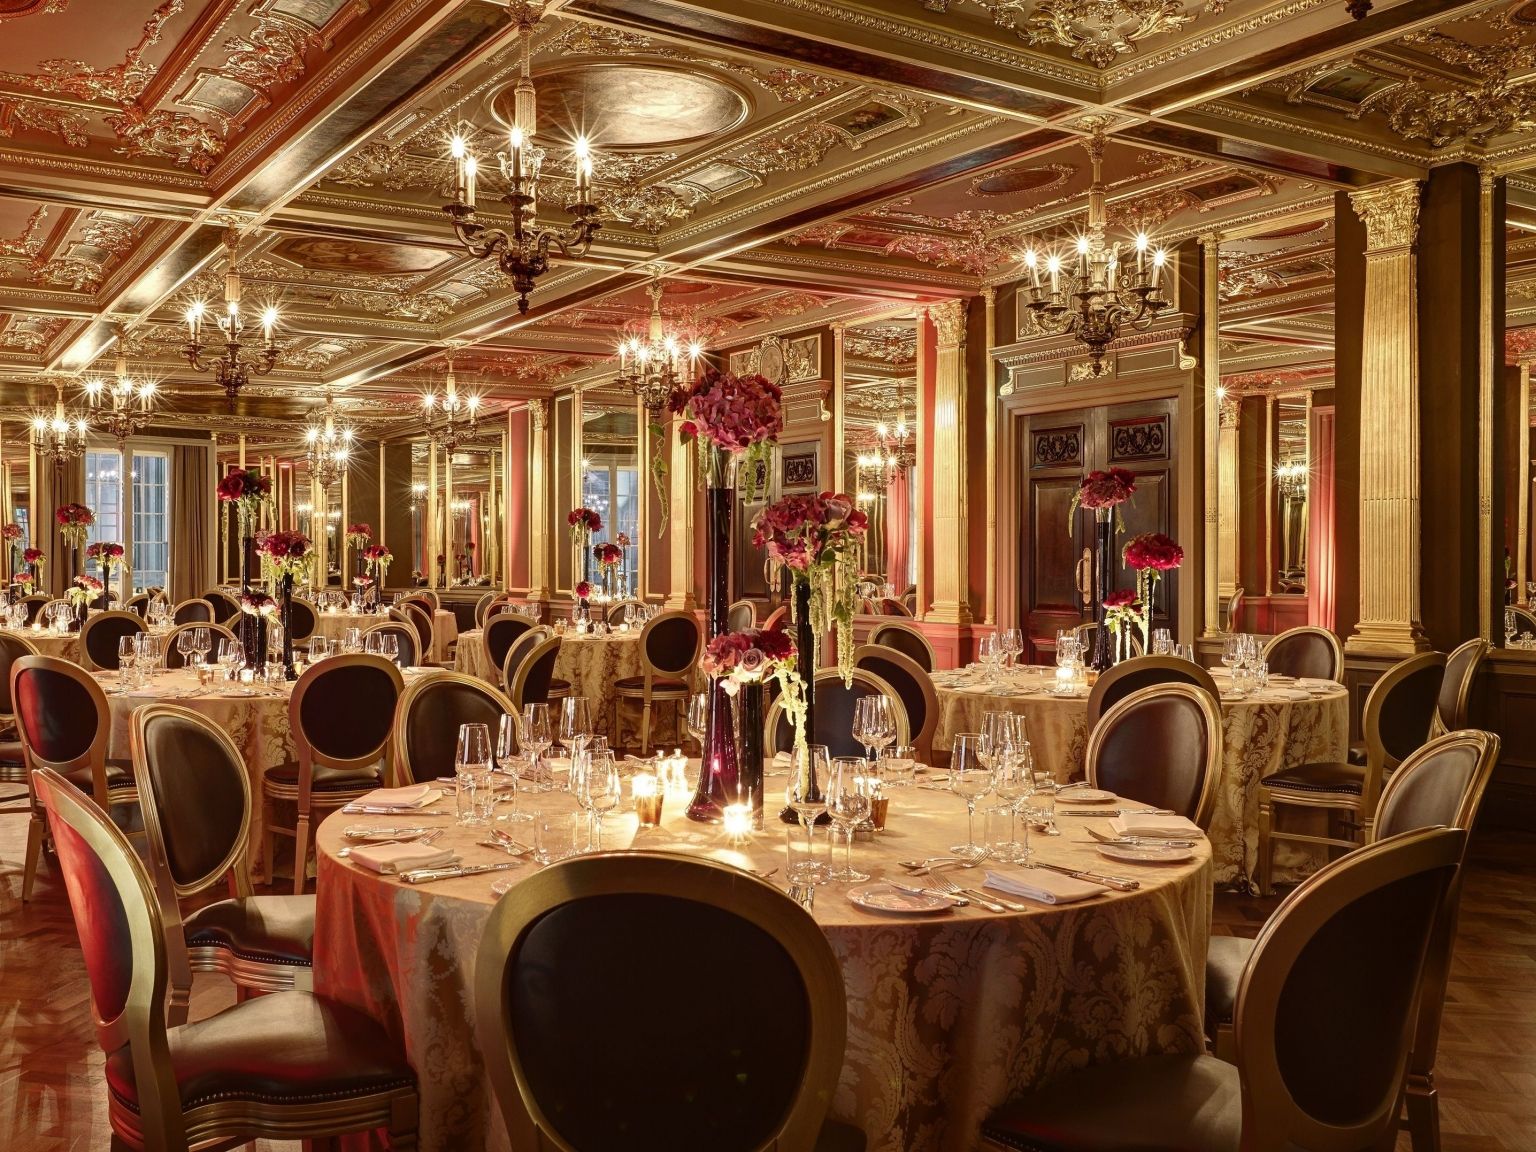 pompadour ballroom hotel cafe royal london